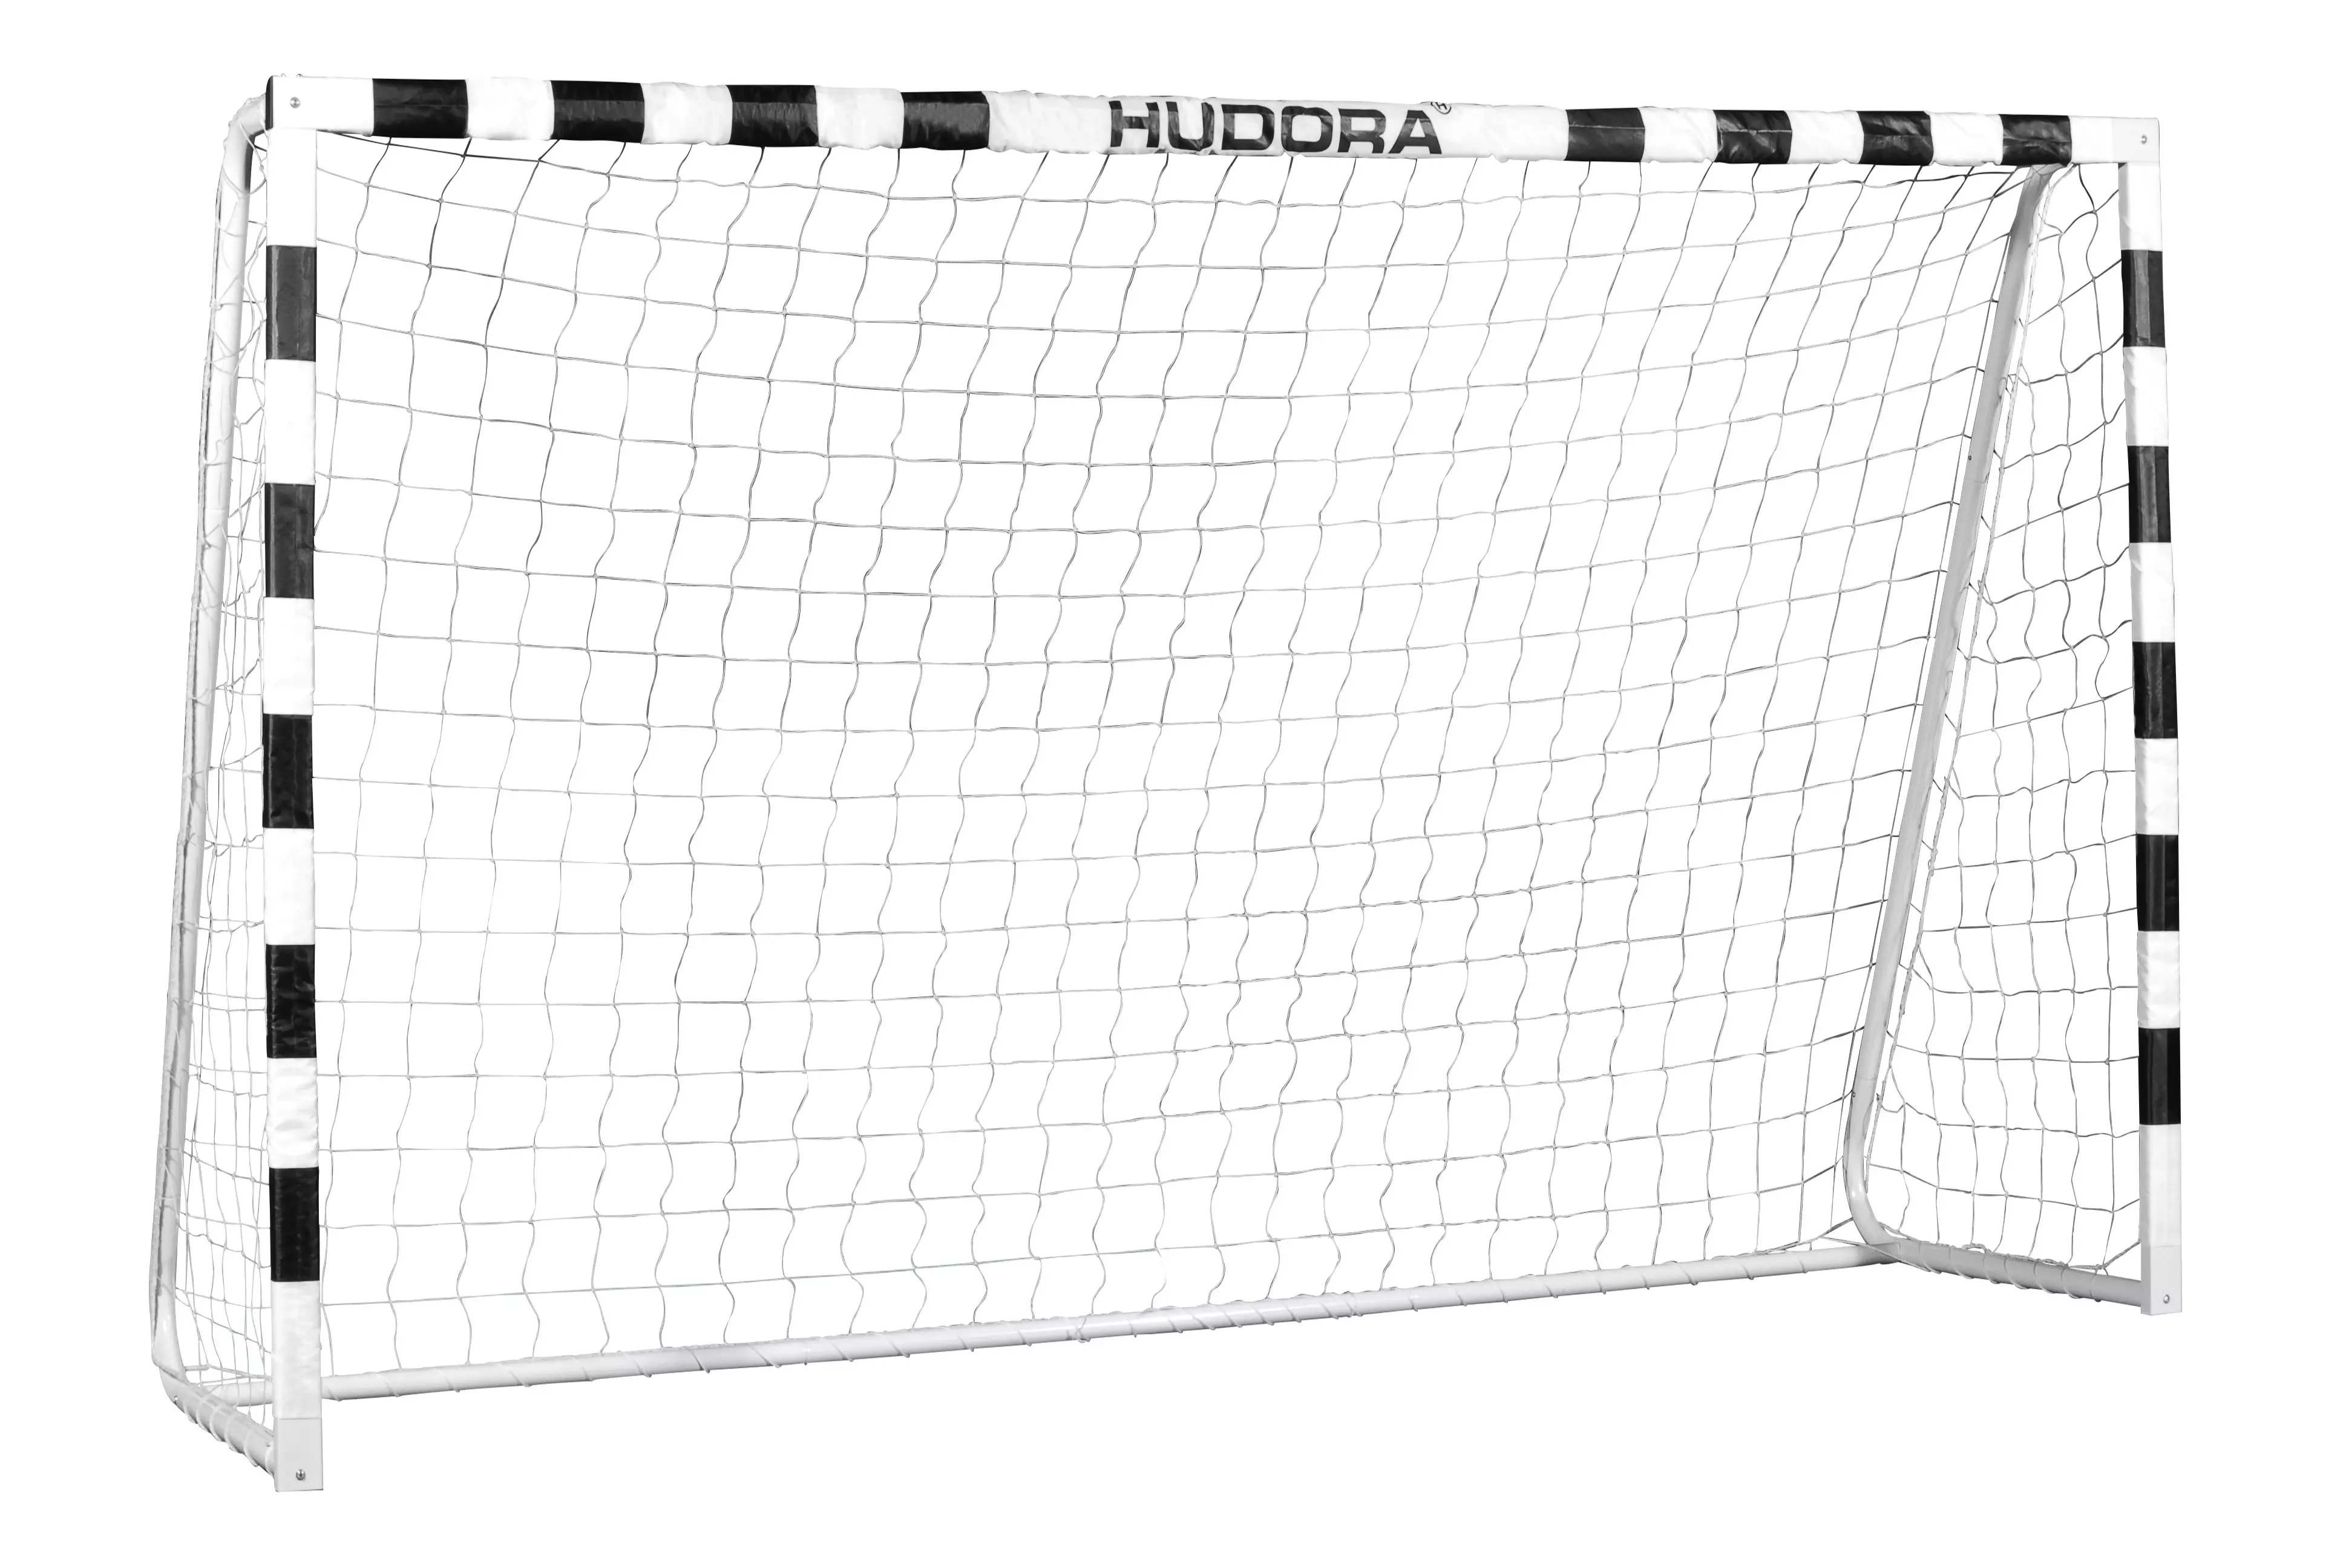 Hudora Football Goal X 200Cm 76903